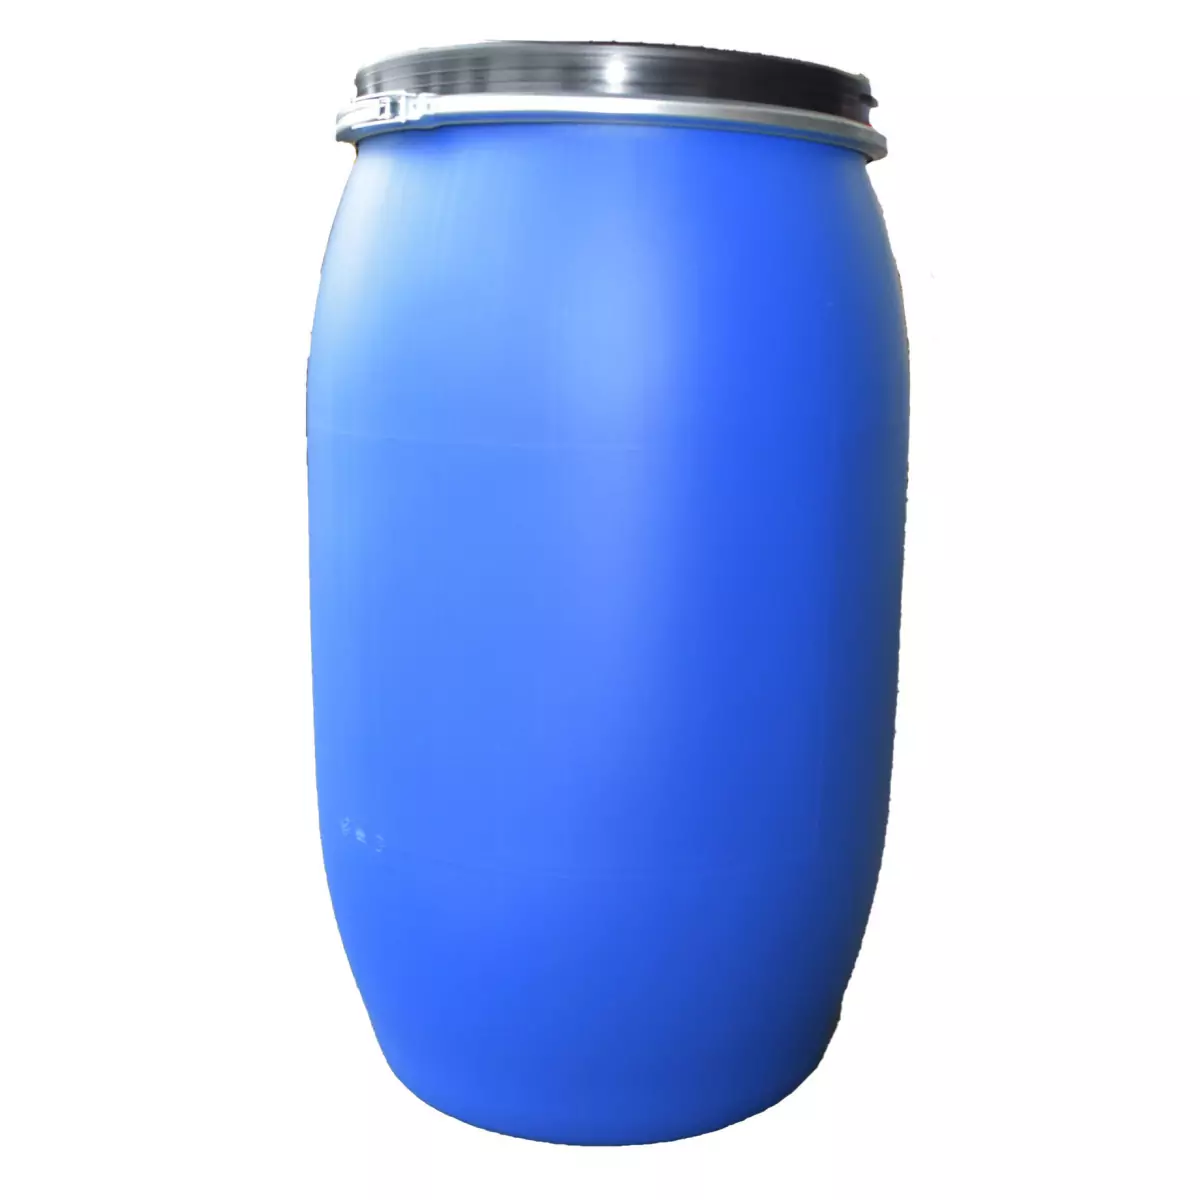 Bidon / Jerrycan 20 litres bleu VIDE avec robinet aeroflow